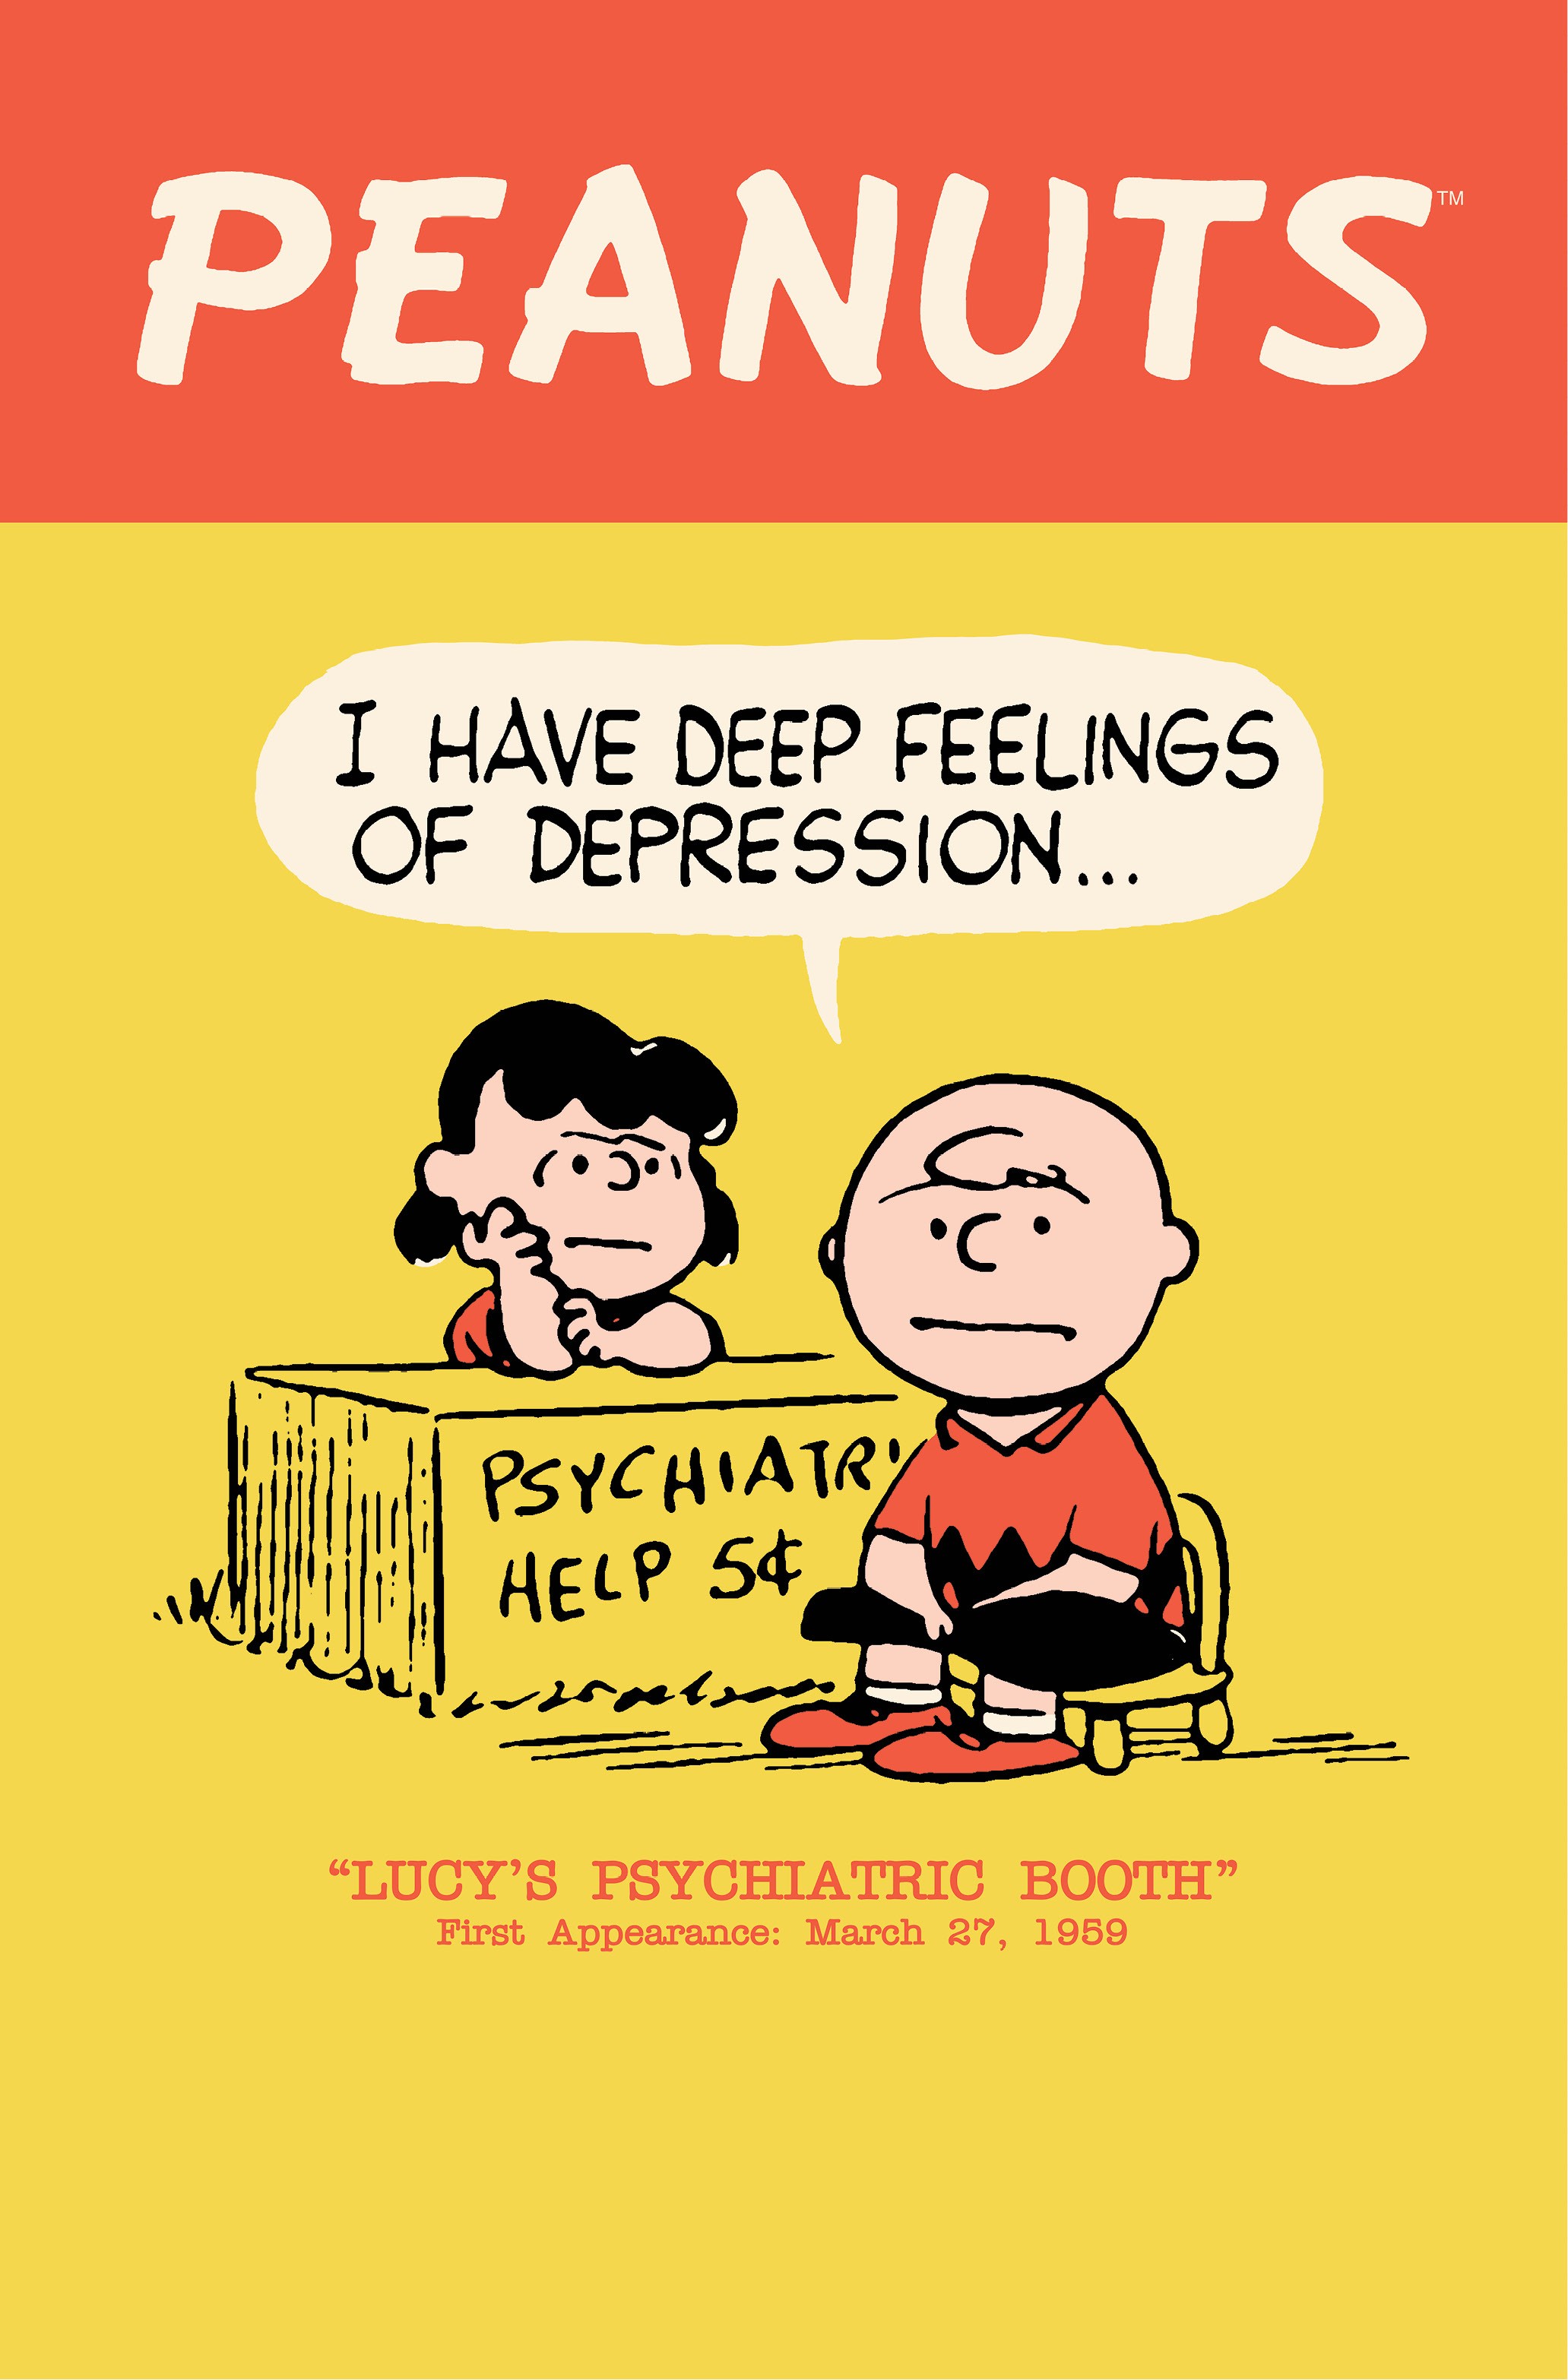 1st Lucy Psychiatric Help Desk in Peanuts